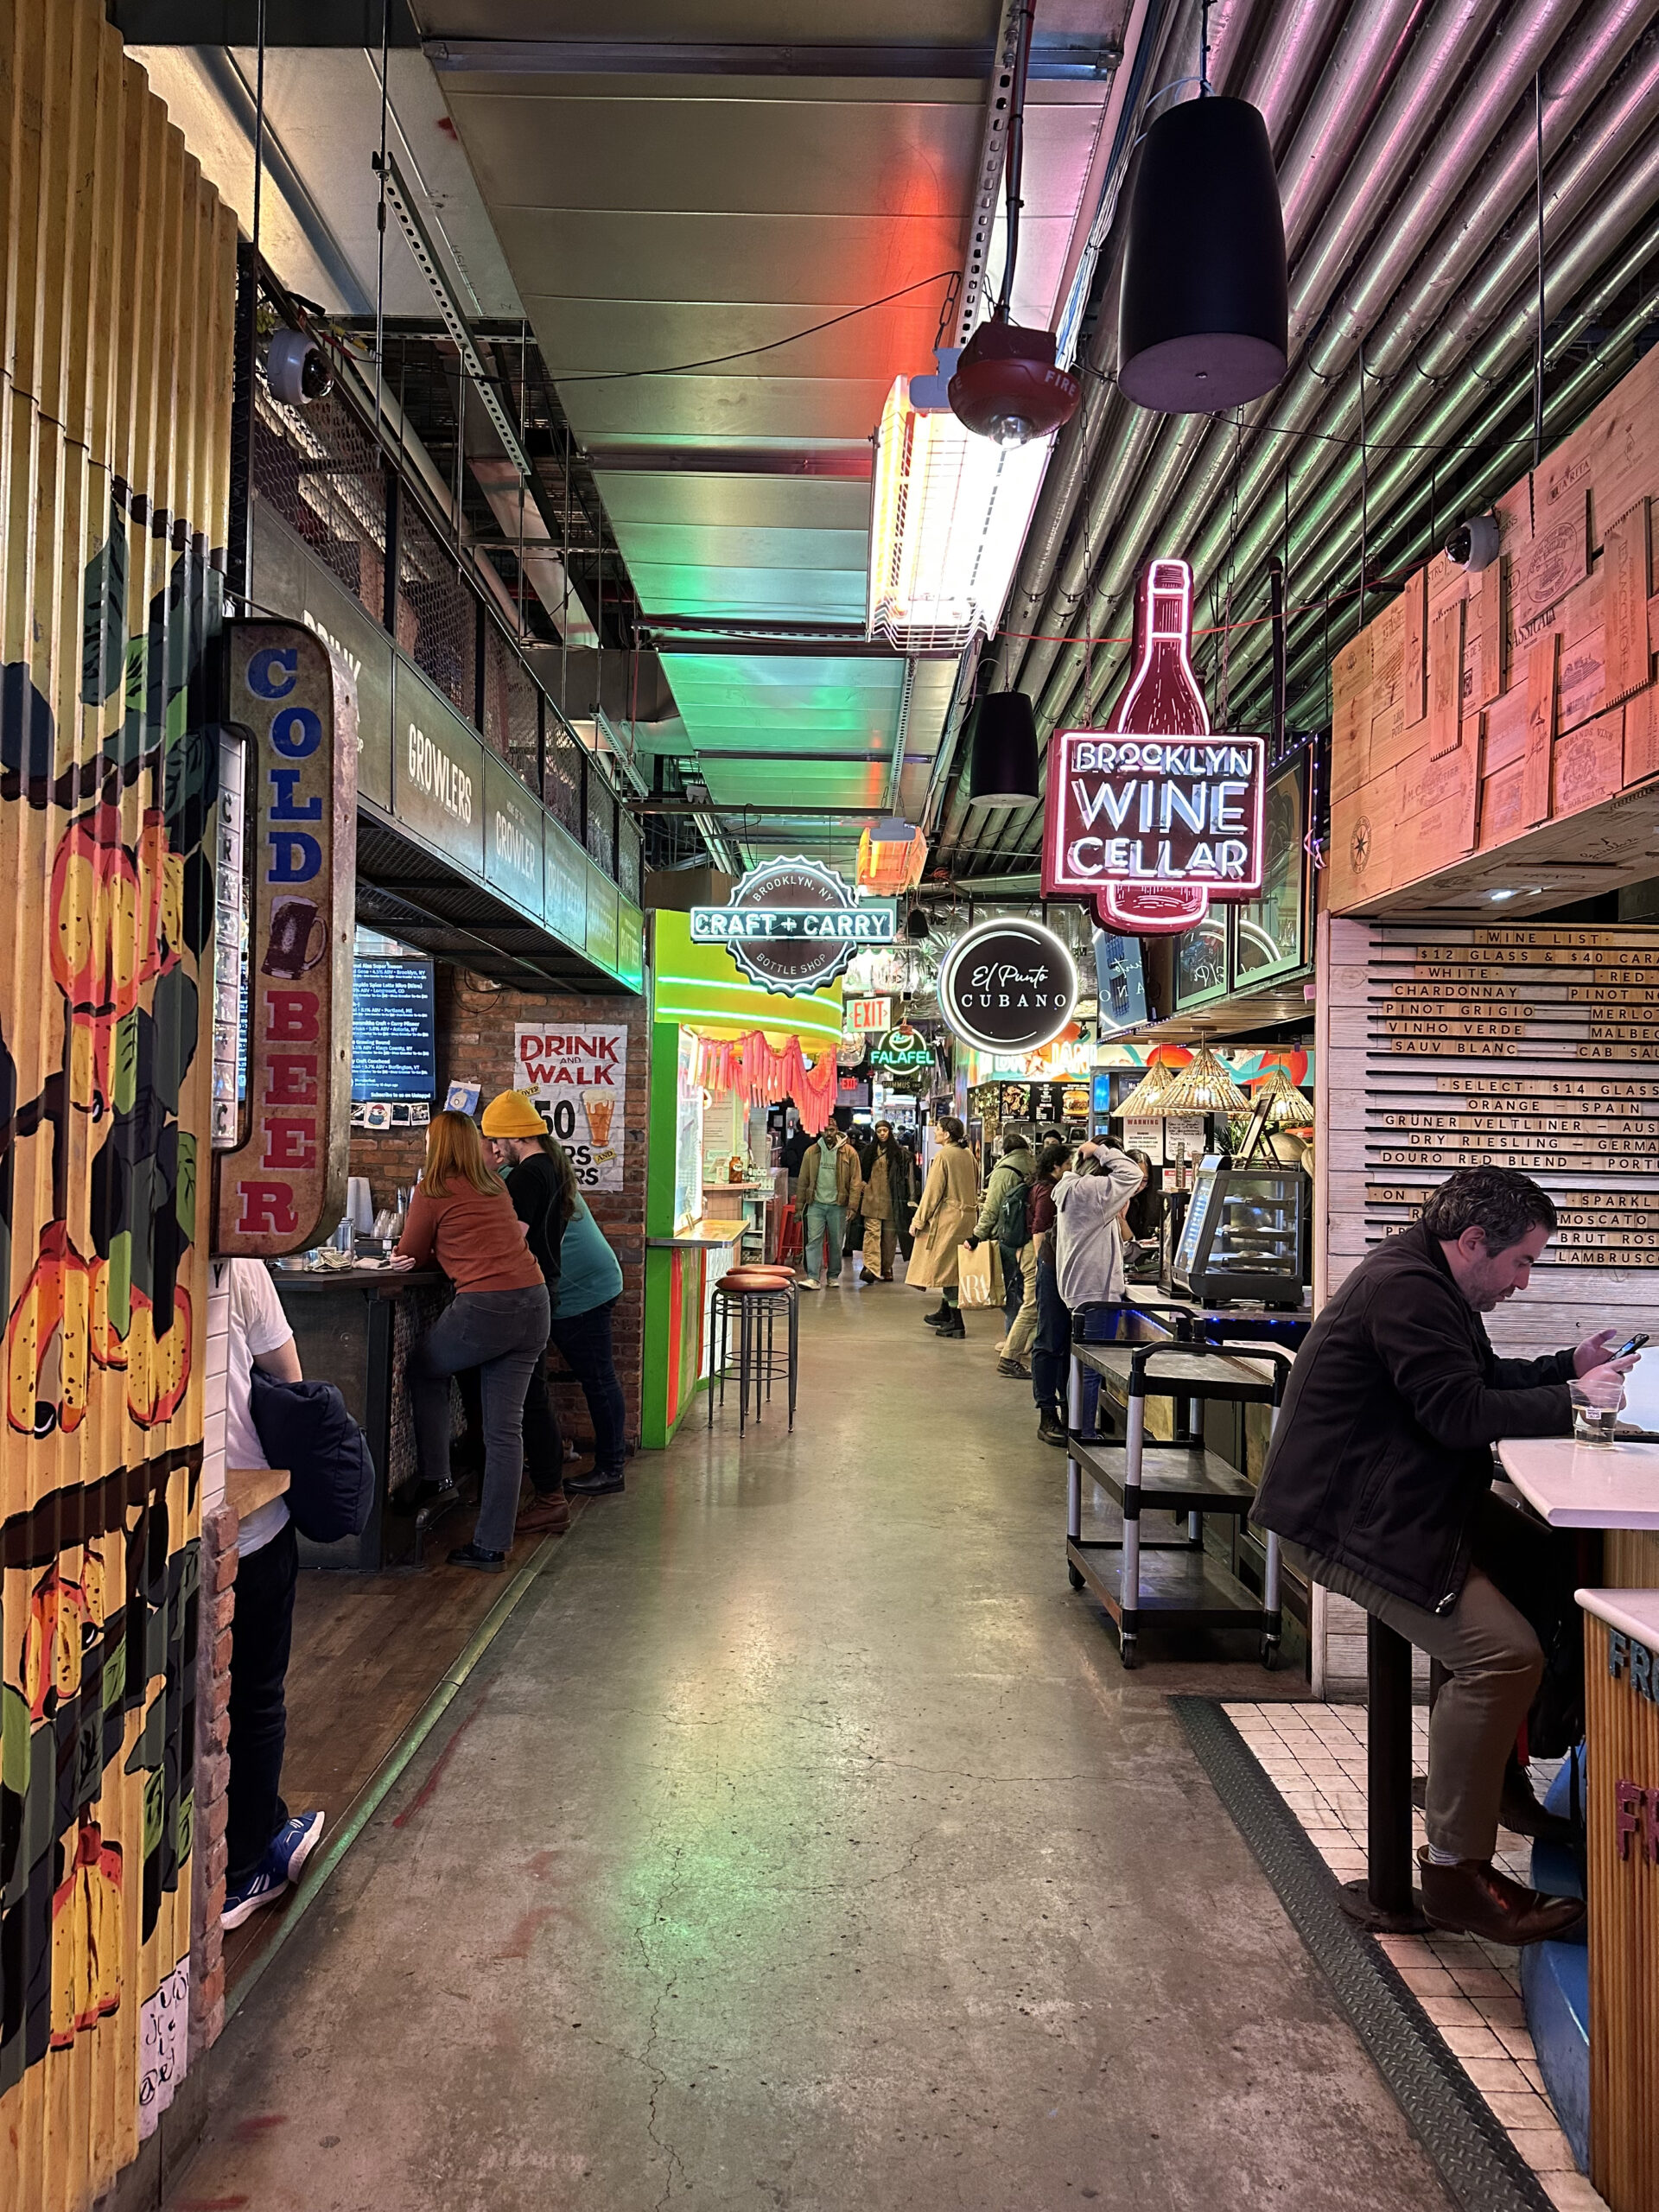 DeKalb Market Hall, an eatery located in Brooklyn.